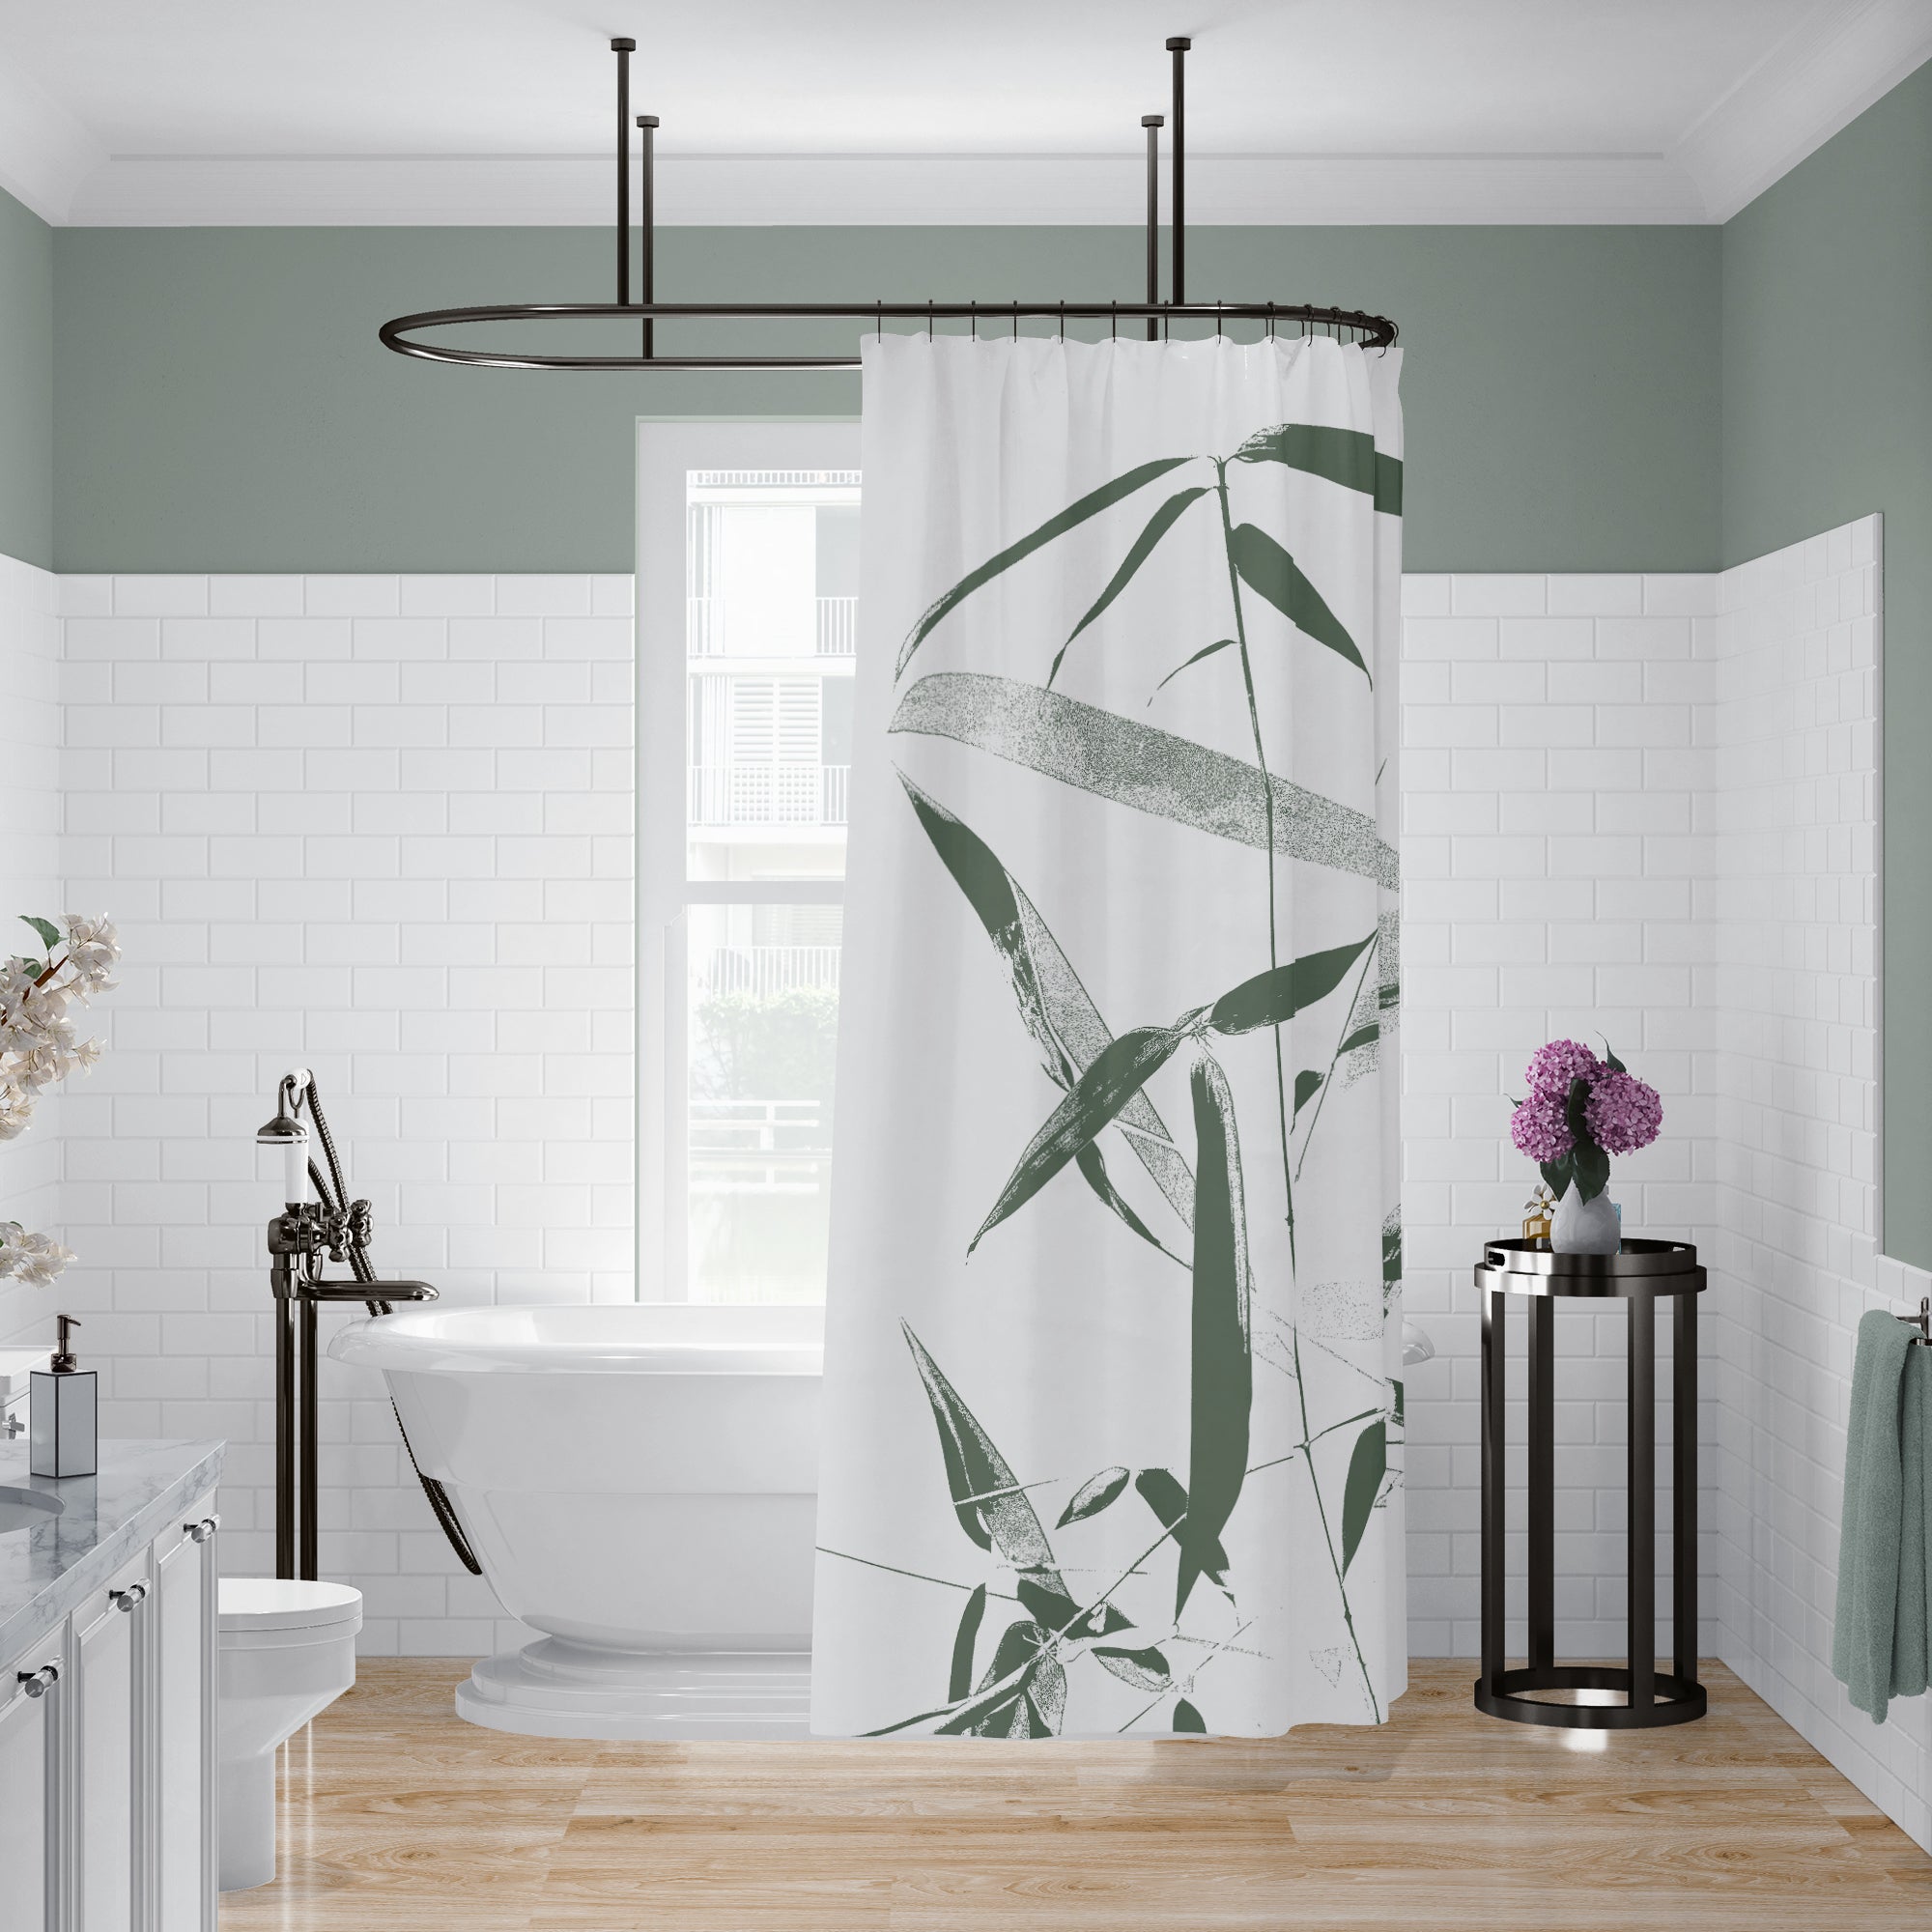 Zenith Fabric Shower Curtain White